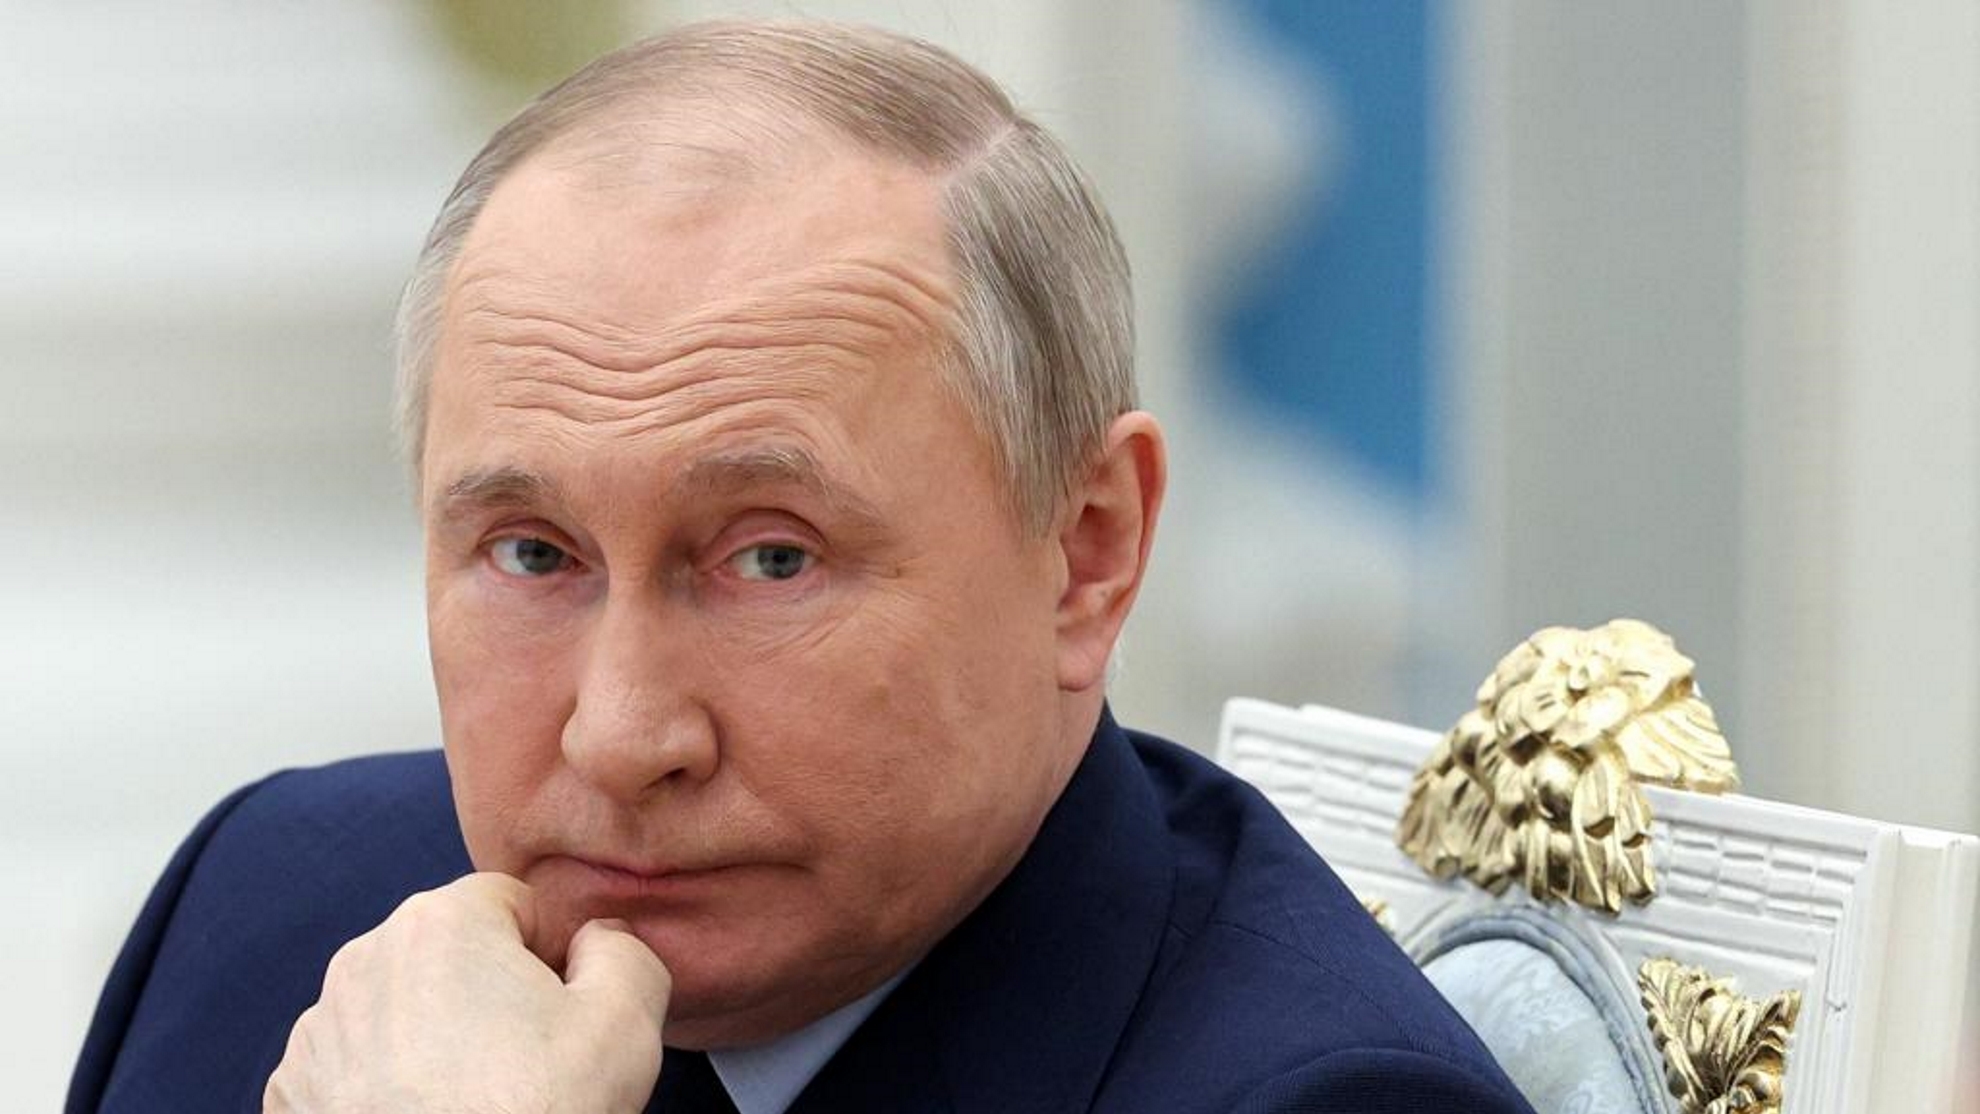 Putin to undergo cancer surgery soon